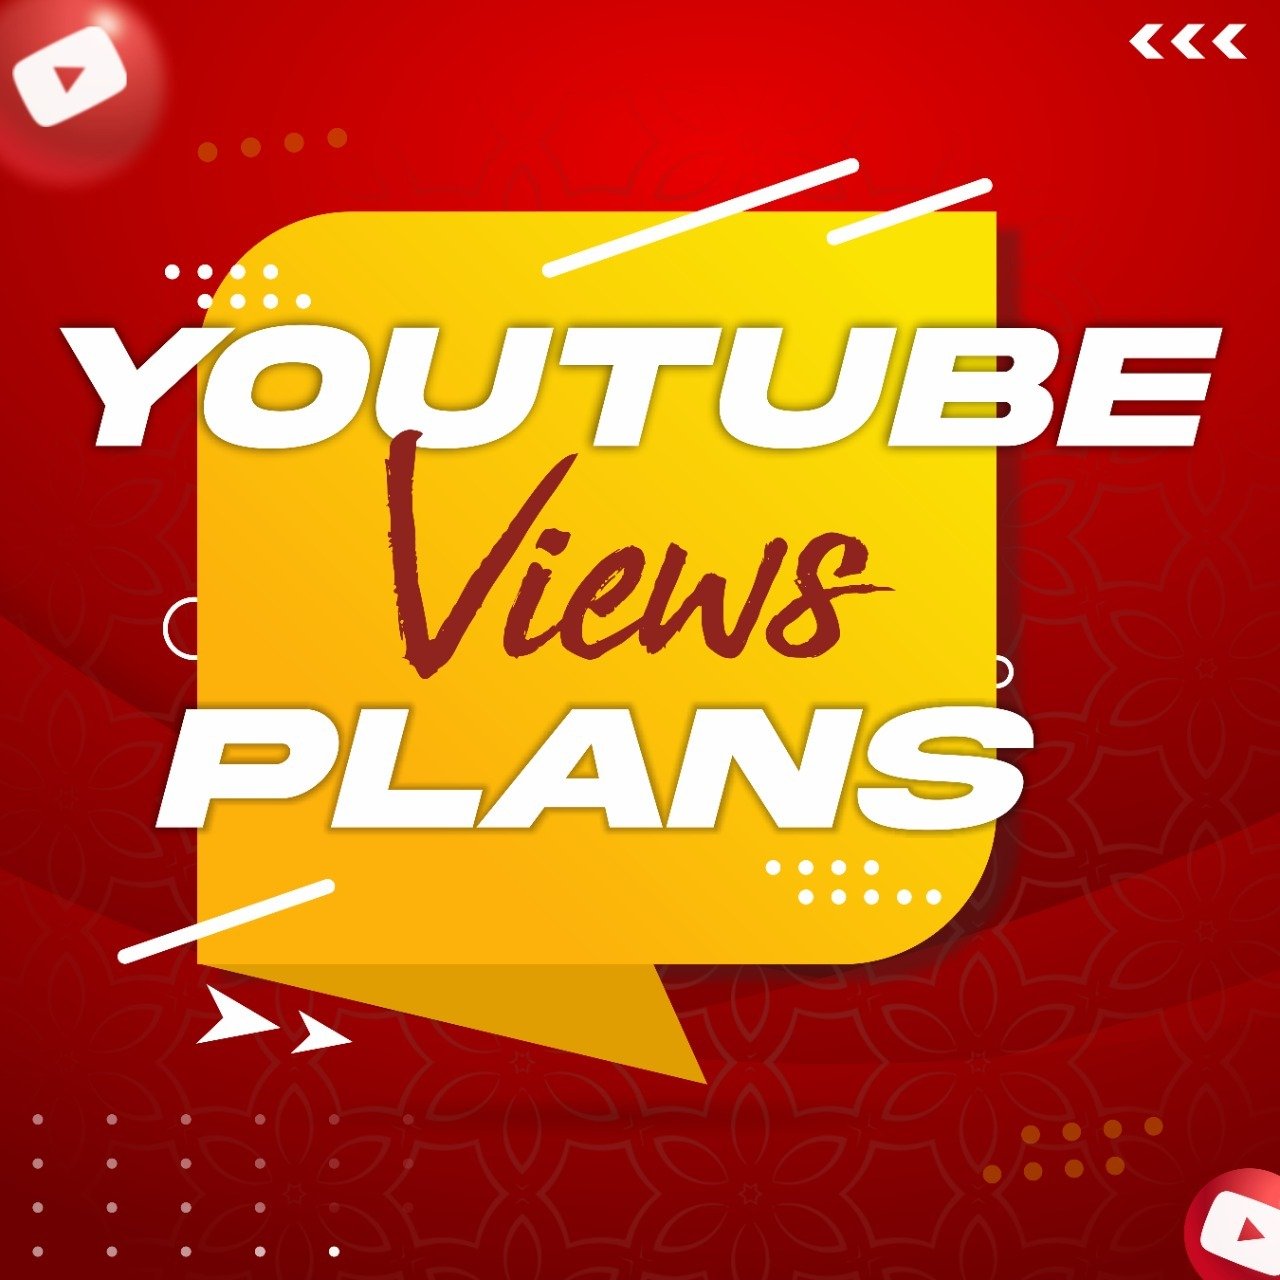 Youtube views plans